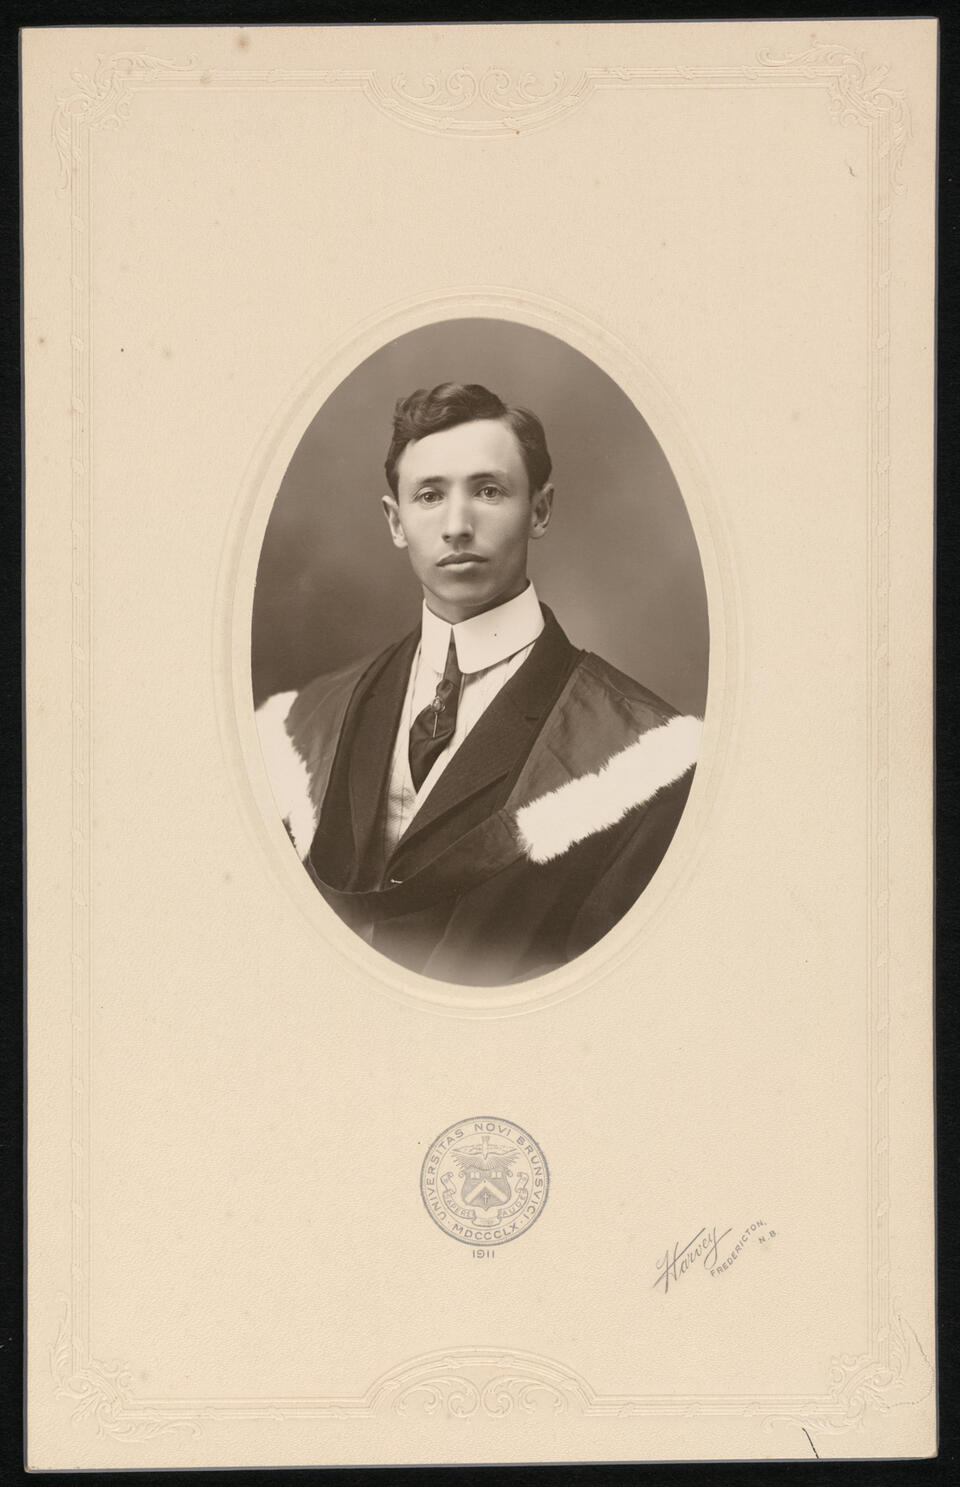 1911 James Brideson Palmer